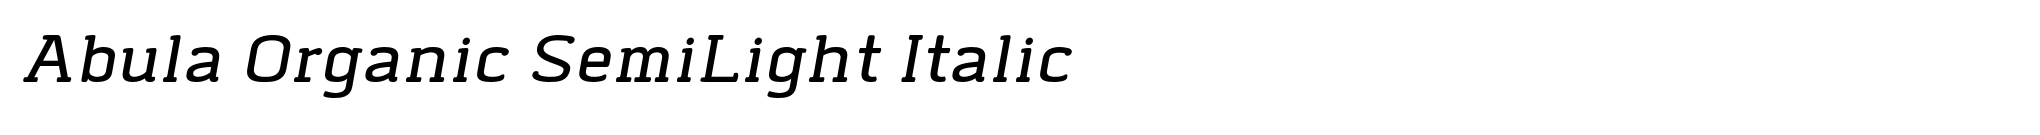 Abula Organic SemiLight Italic image